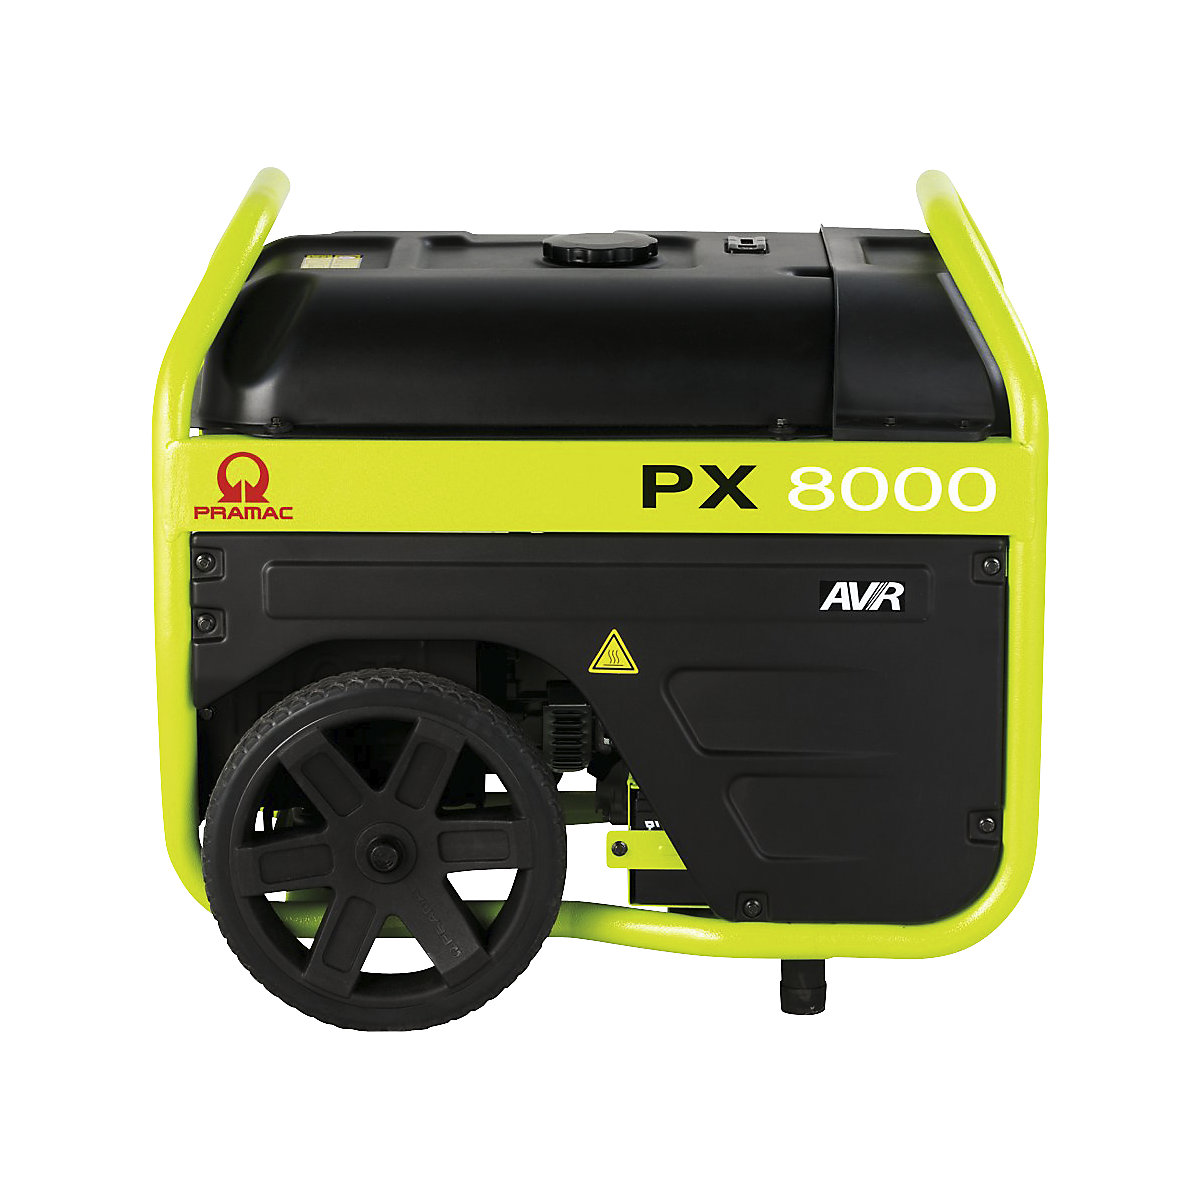 PX series power generator - Pramac